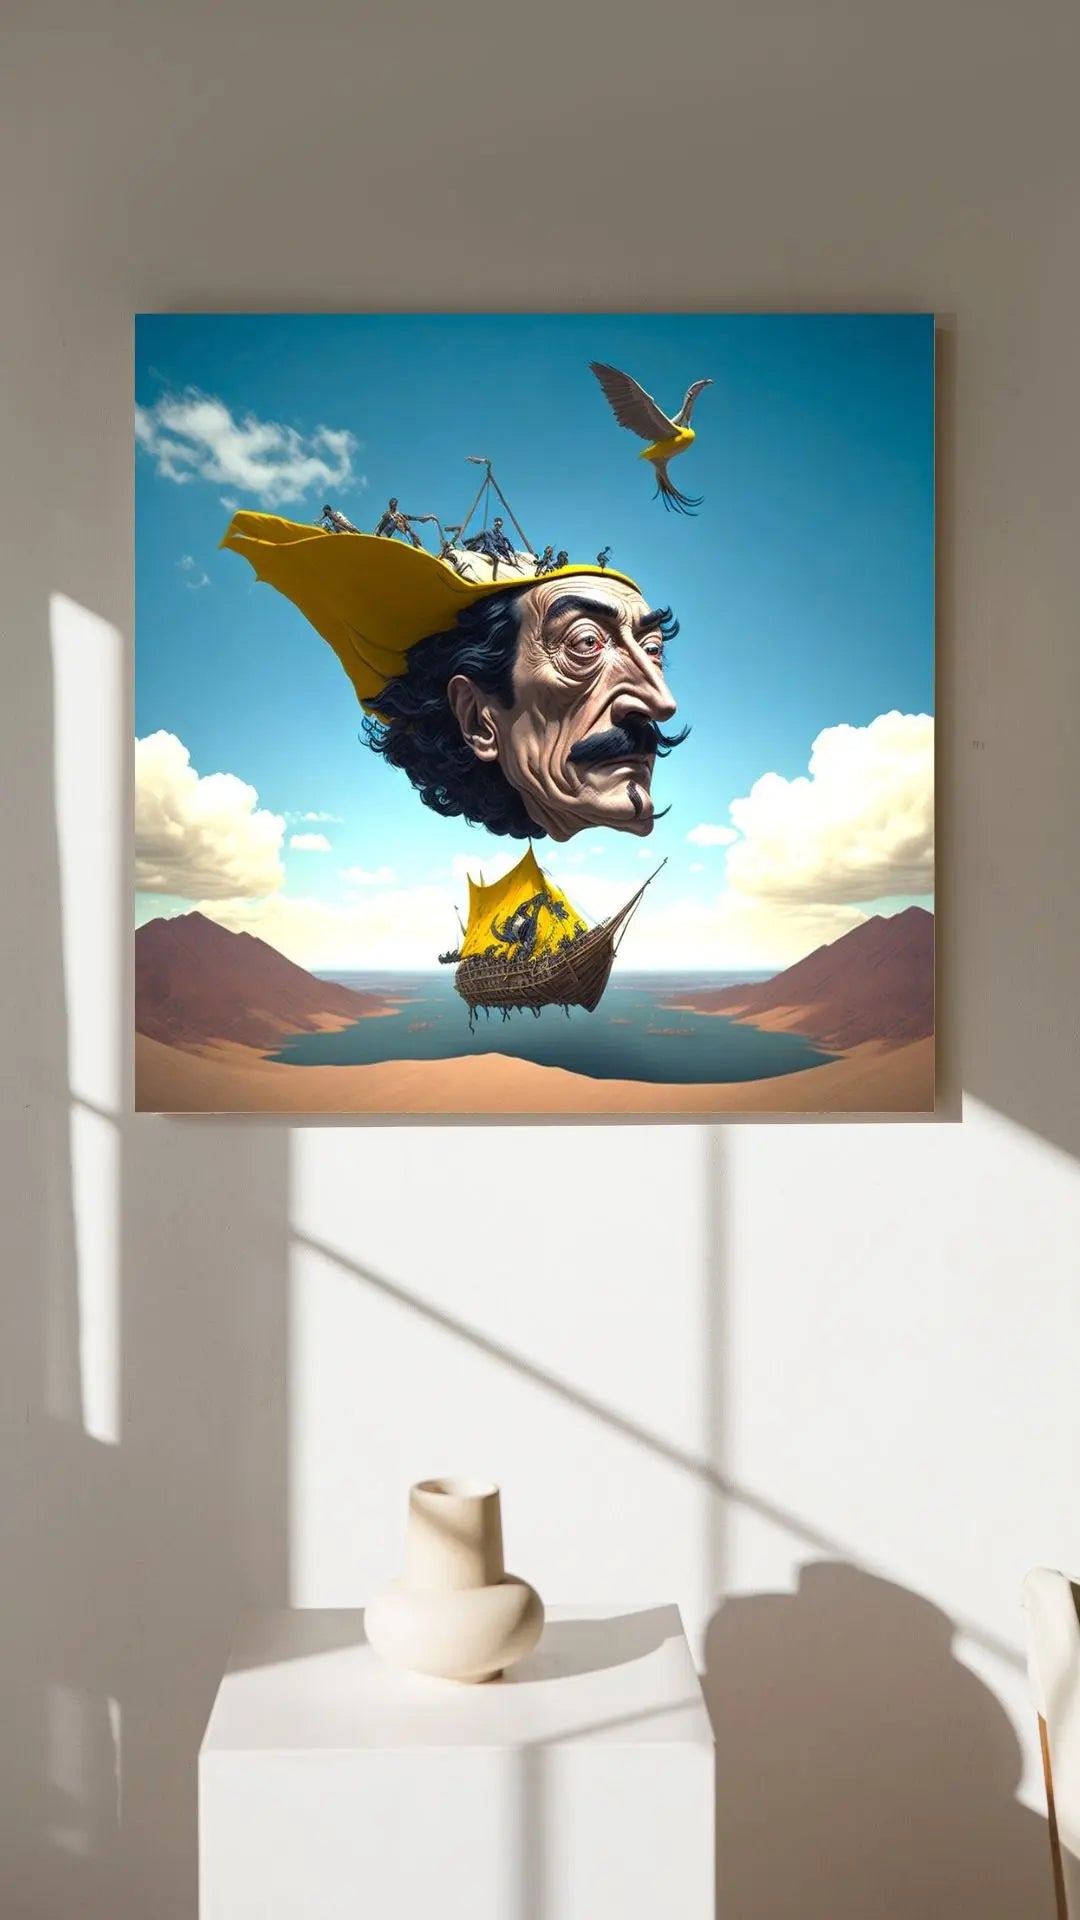 TAP PROMPT SALVADOR DALI " Self Portrait" Reimagined TRY A PROMPT